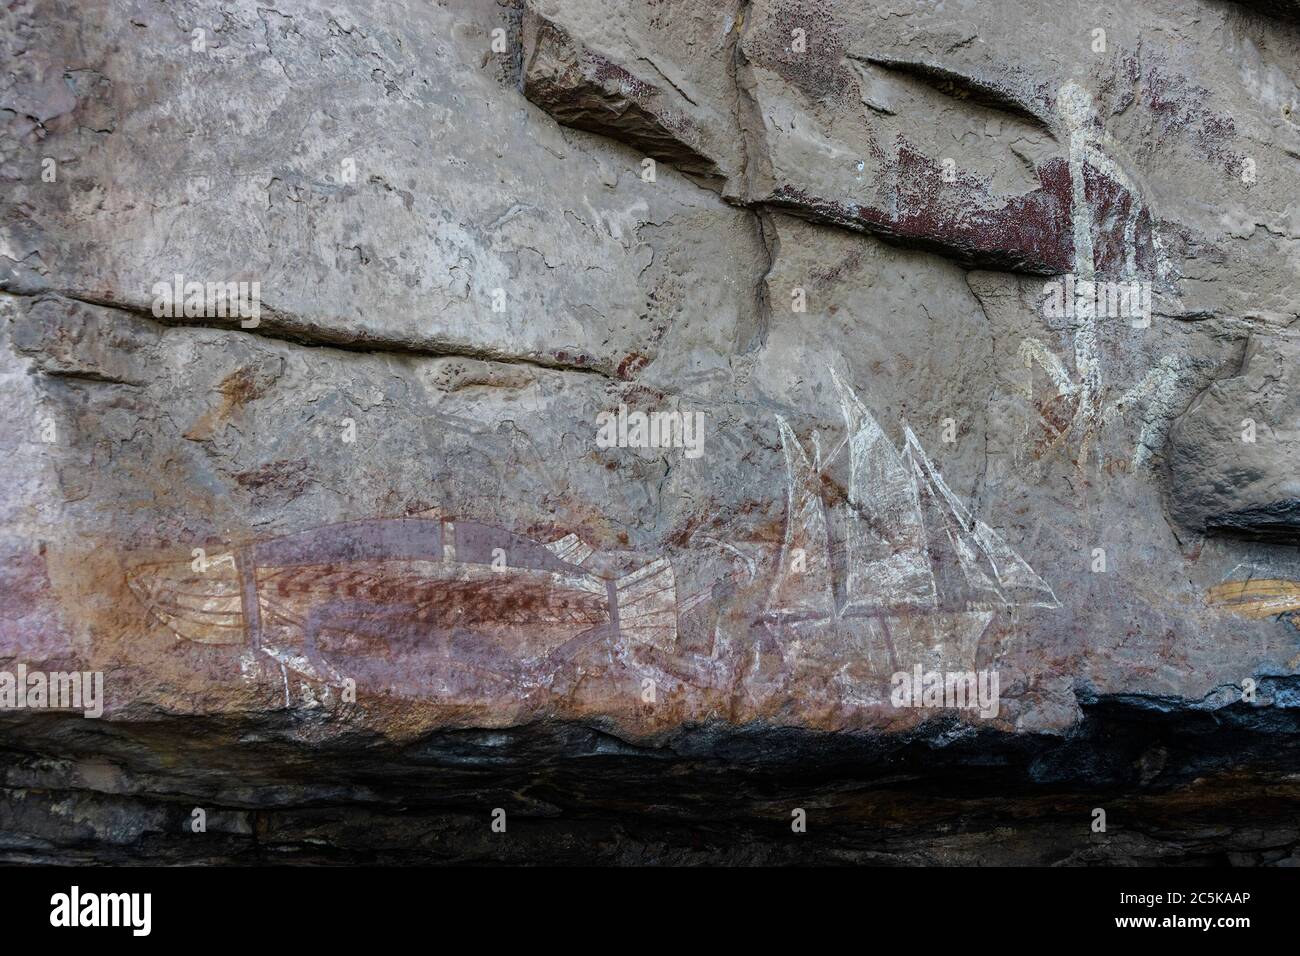 Nanguluwurr, Australia - 13 Marzo 2020: Antica arte rupestre aborigena australiana a Nanguluwurr. Foto Stock